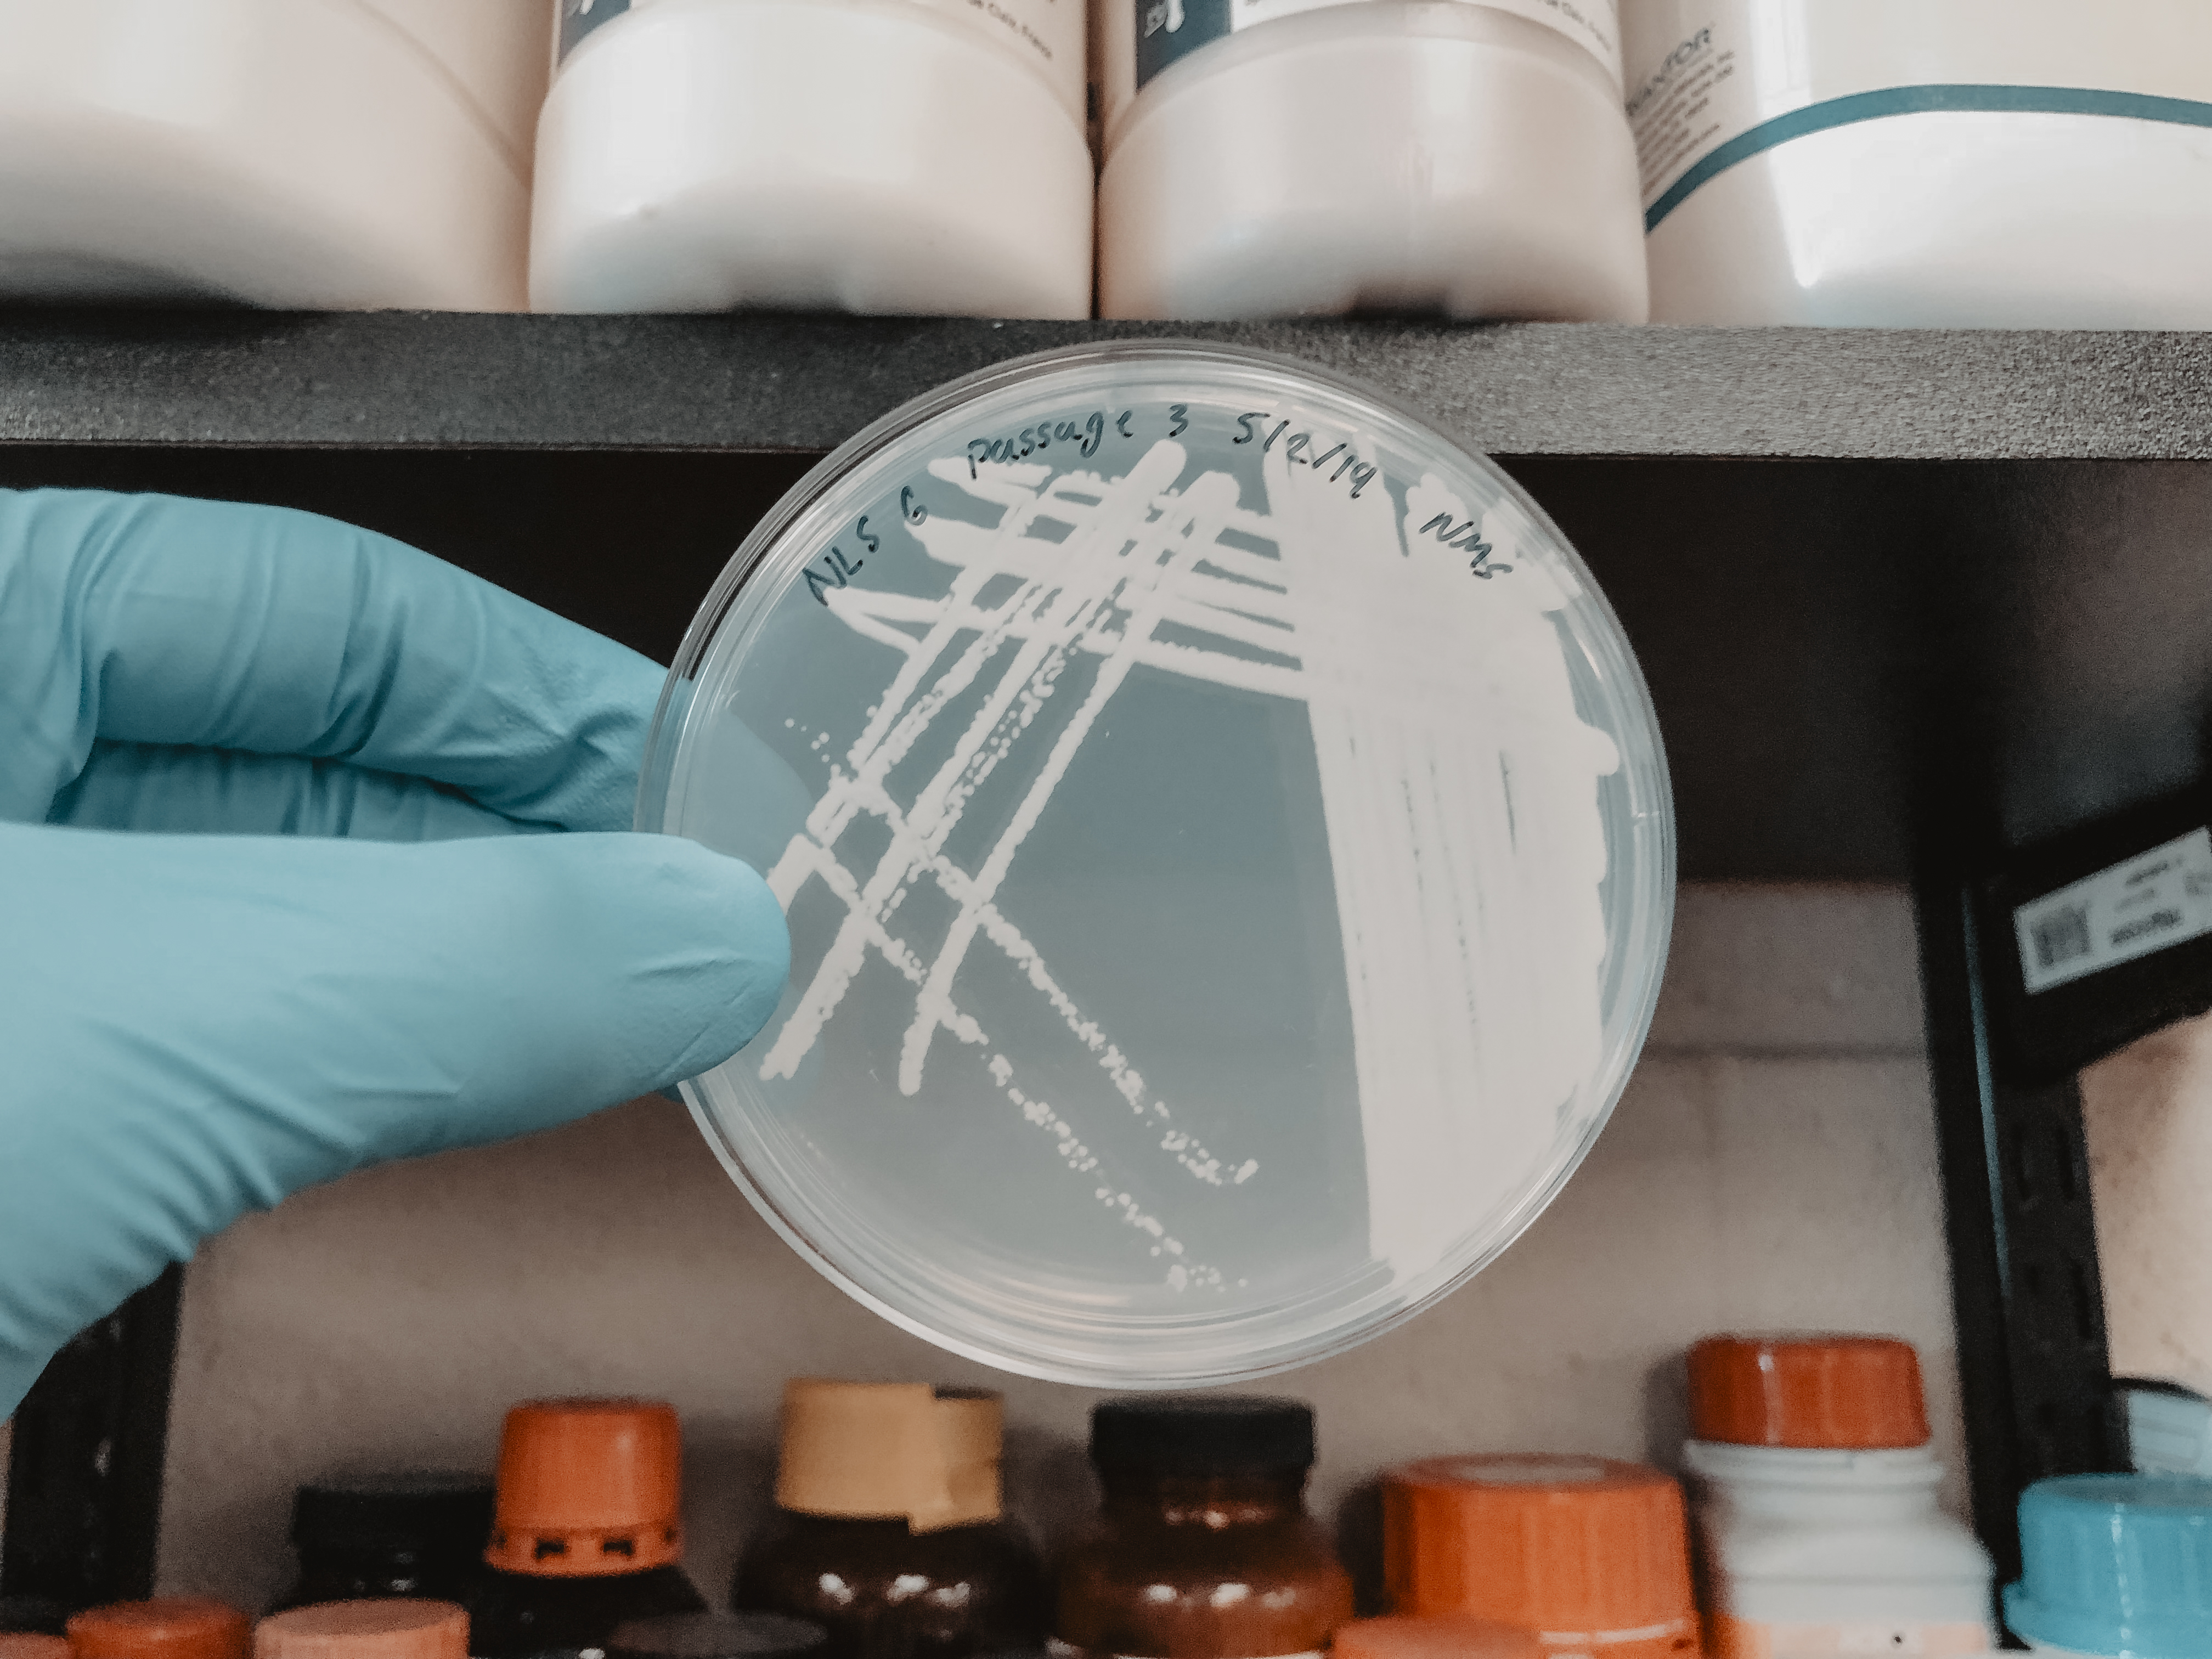 Petri plate with colonies of a methanotrophic microorganism growing on agar